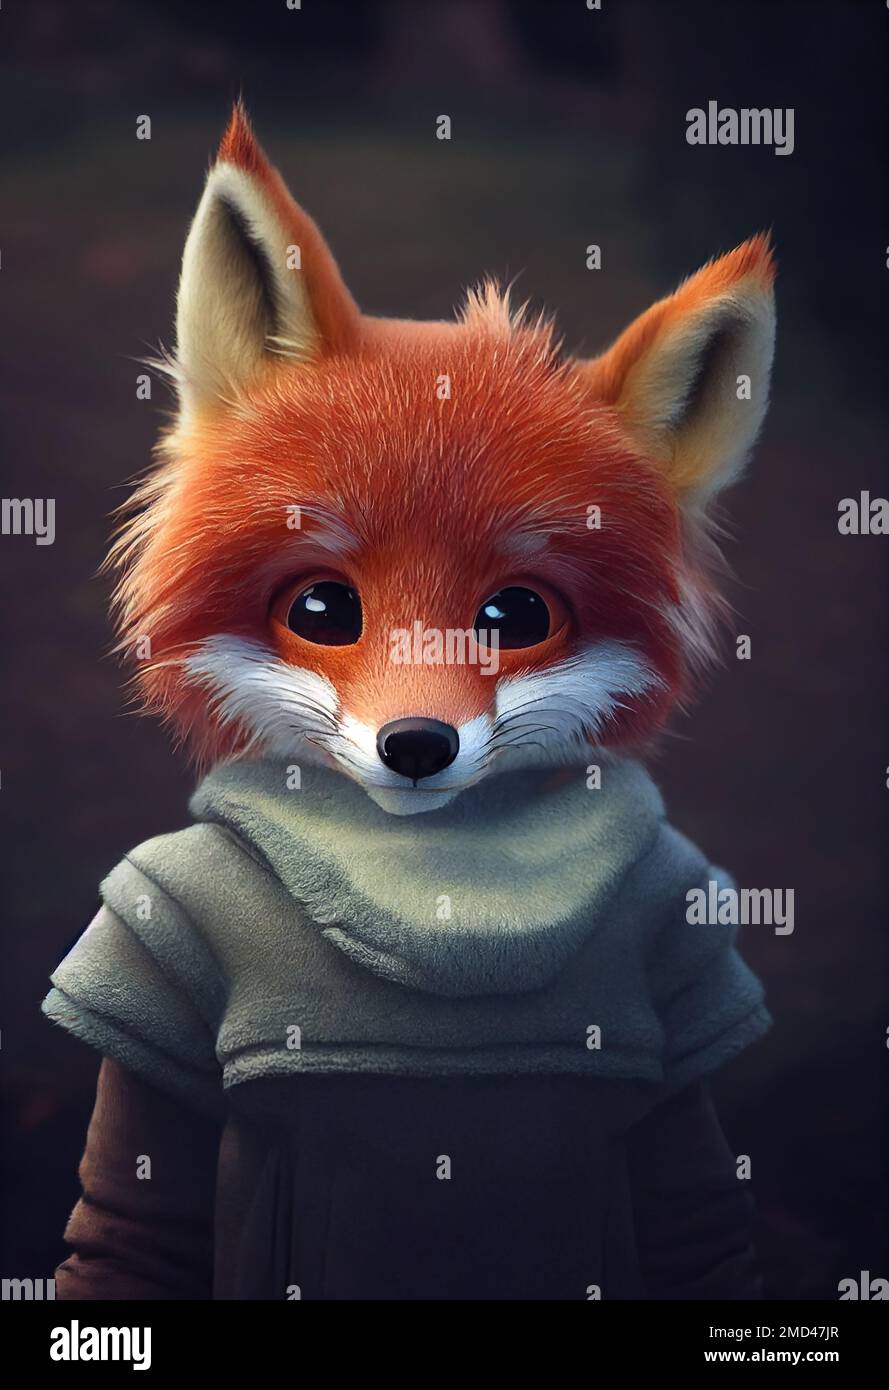 Cute fox character Stock Photo